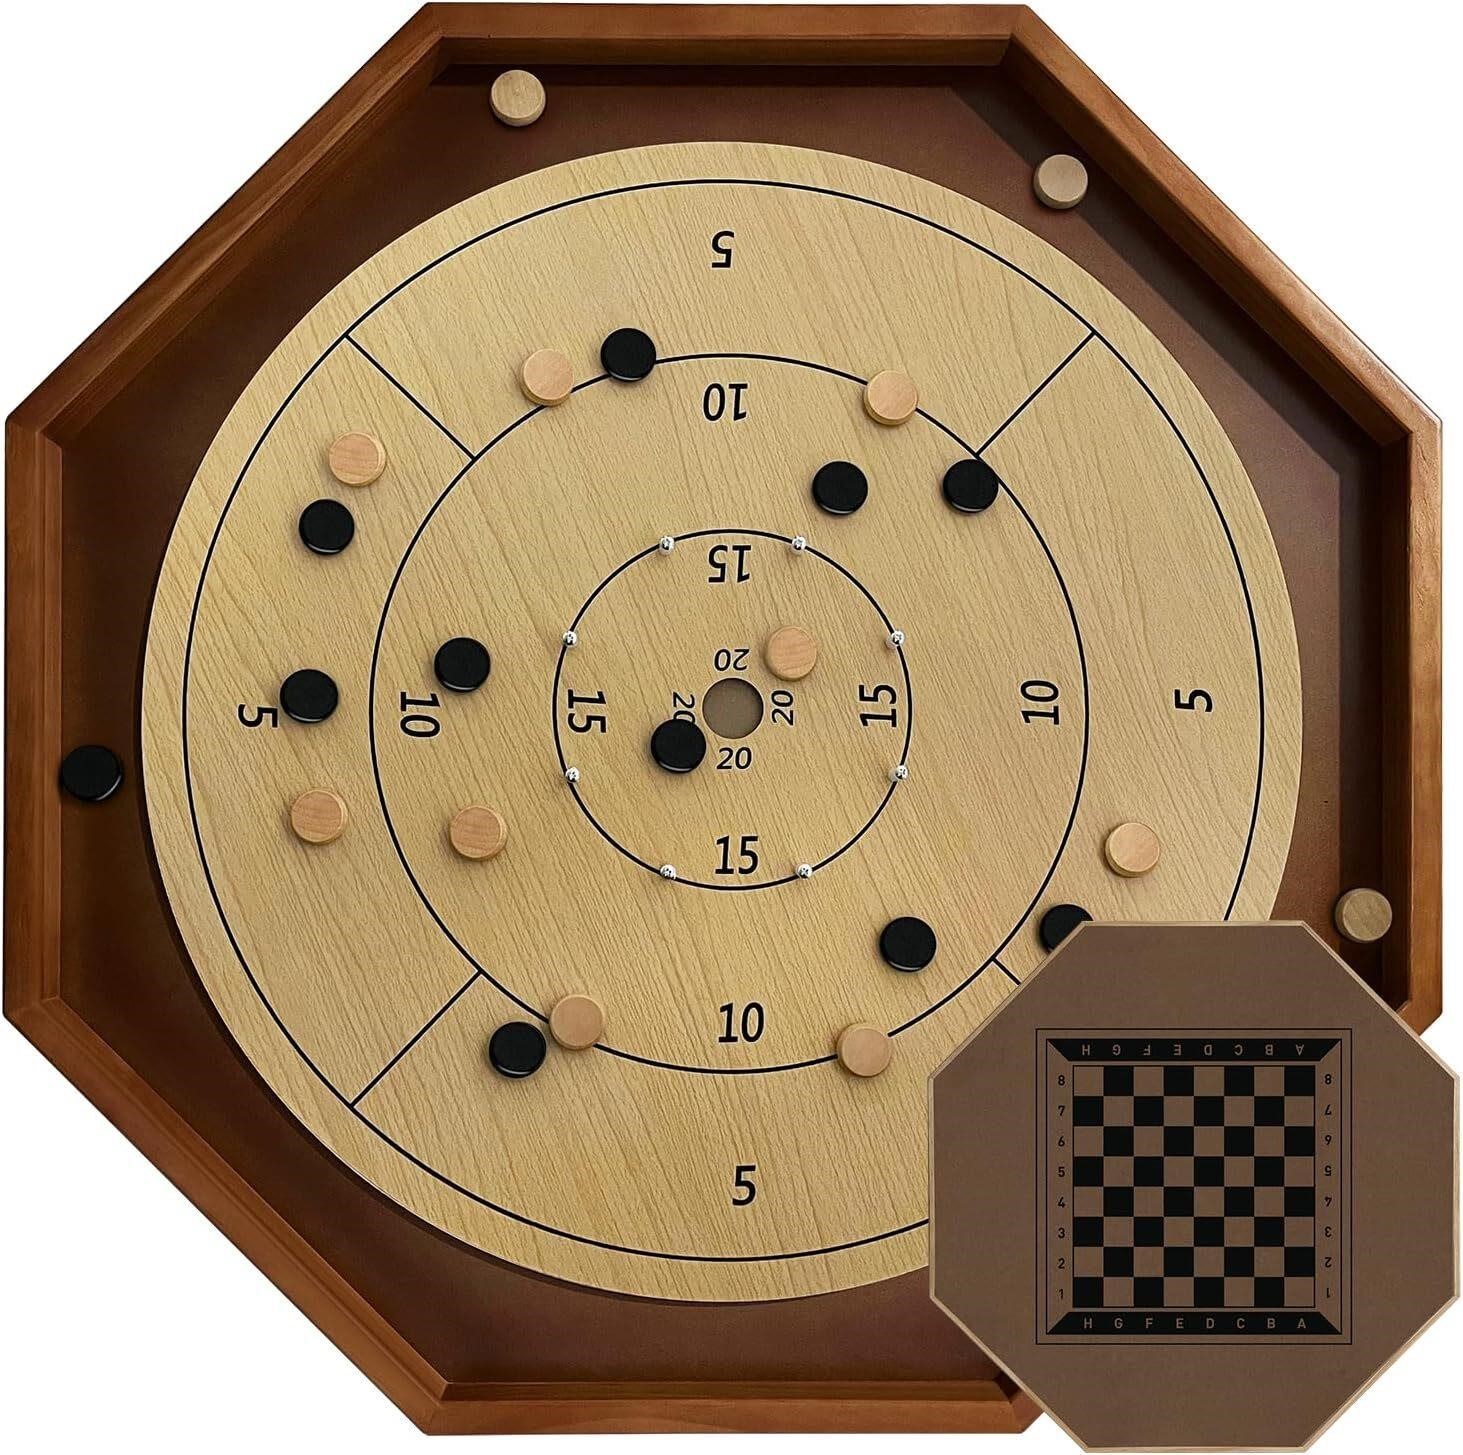 30 Inch Tournament Crokinole Board Game  2 in 1